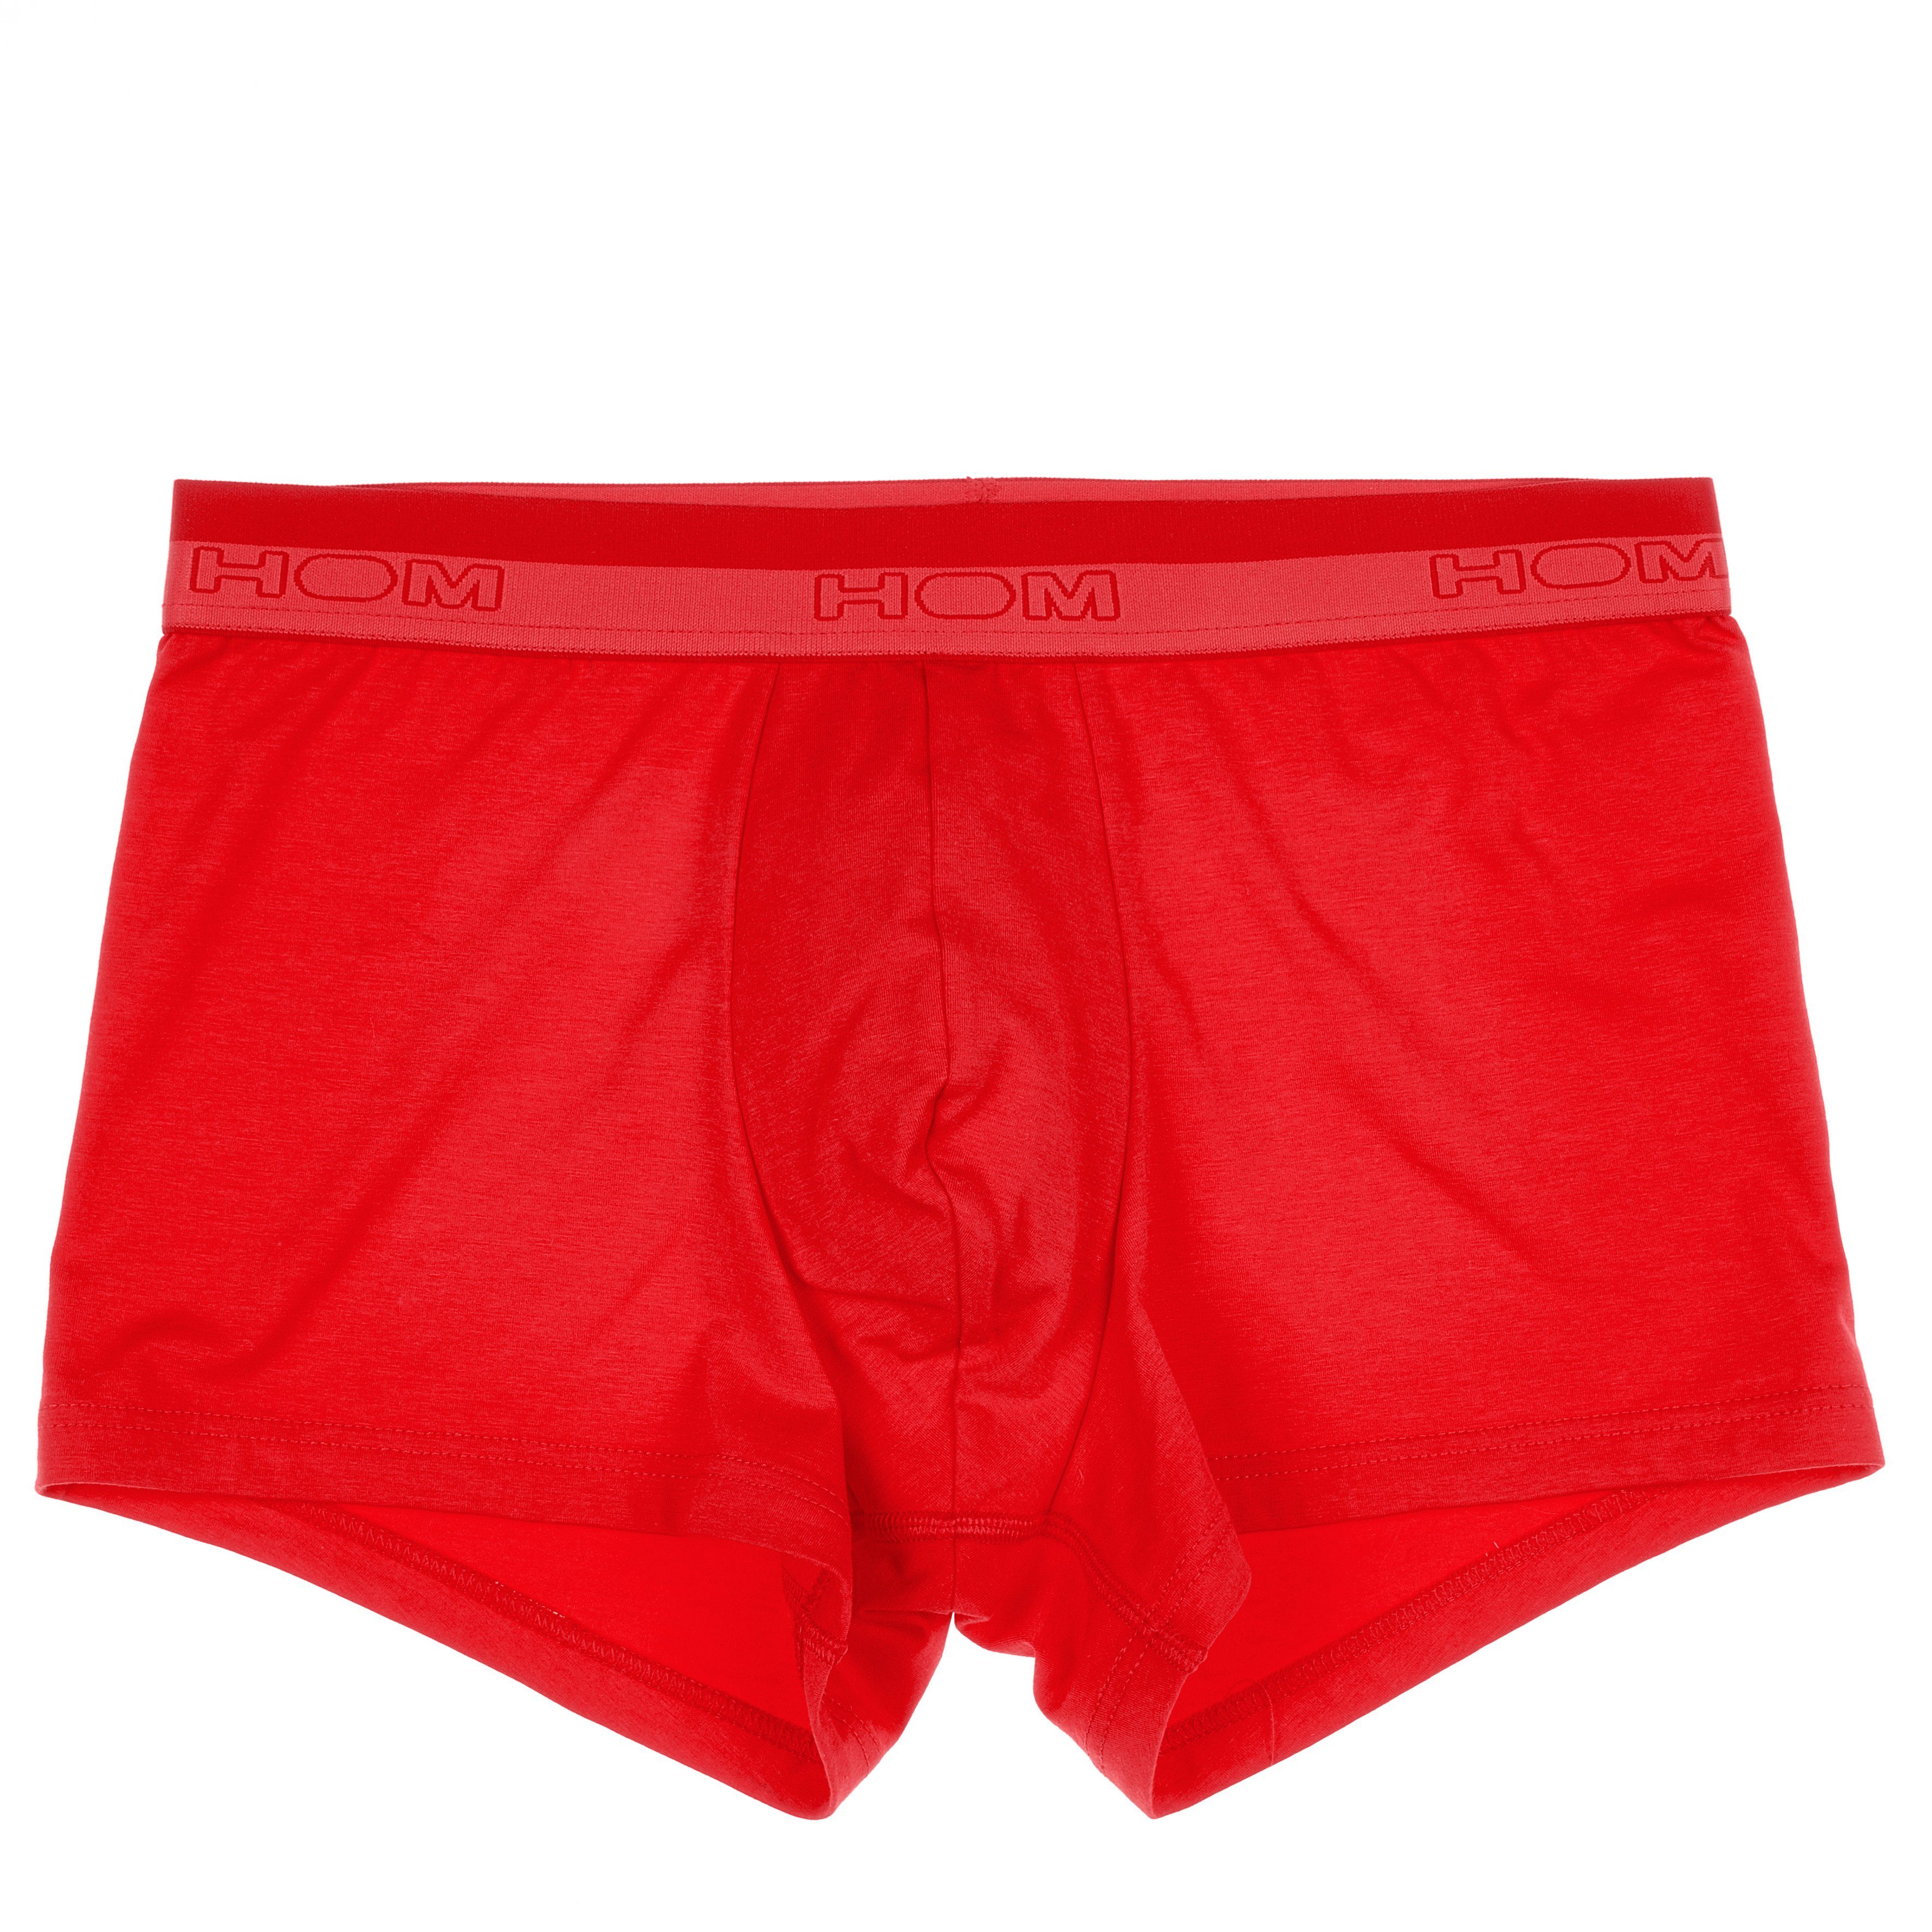 Boxer Hom Classic Retro red Briefs Pants